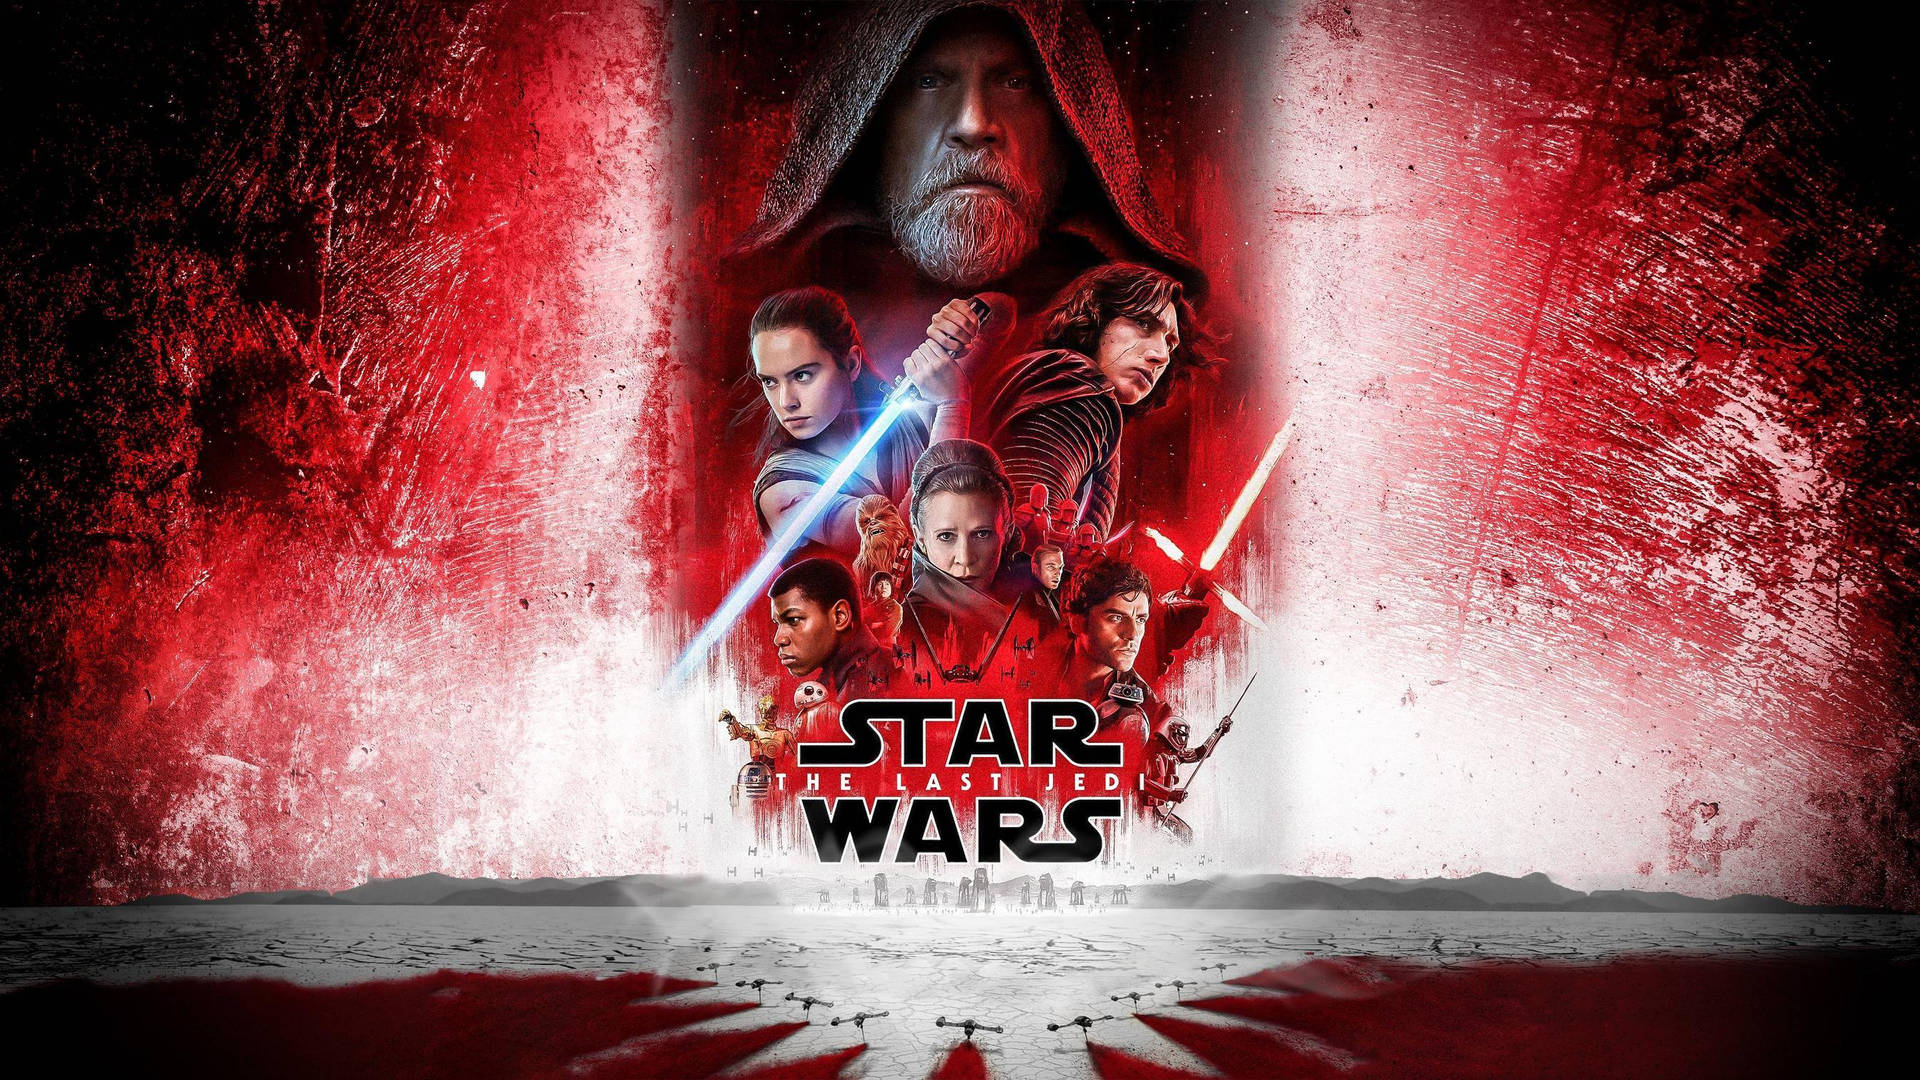 Rey and Kylo Ren navigate their complex relationship in Star Wars: The Last Jedi Wallpaper